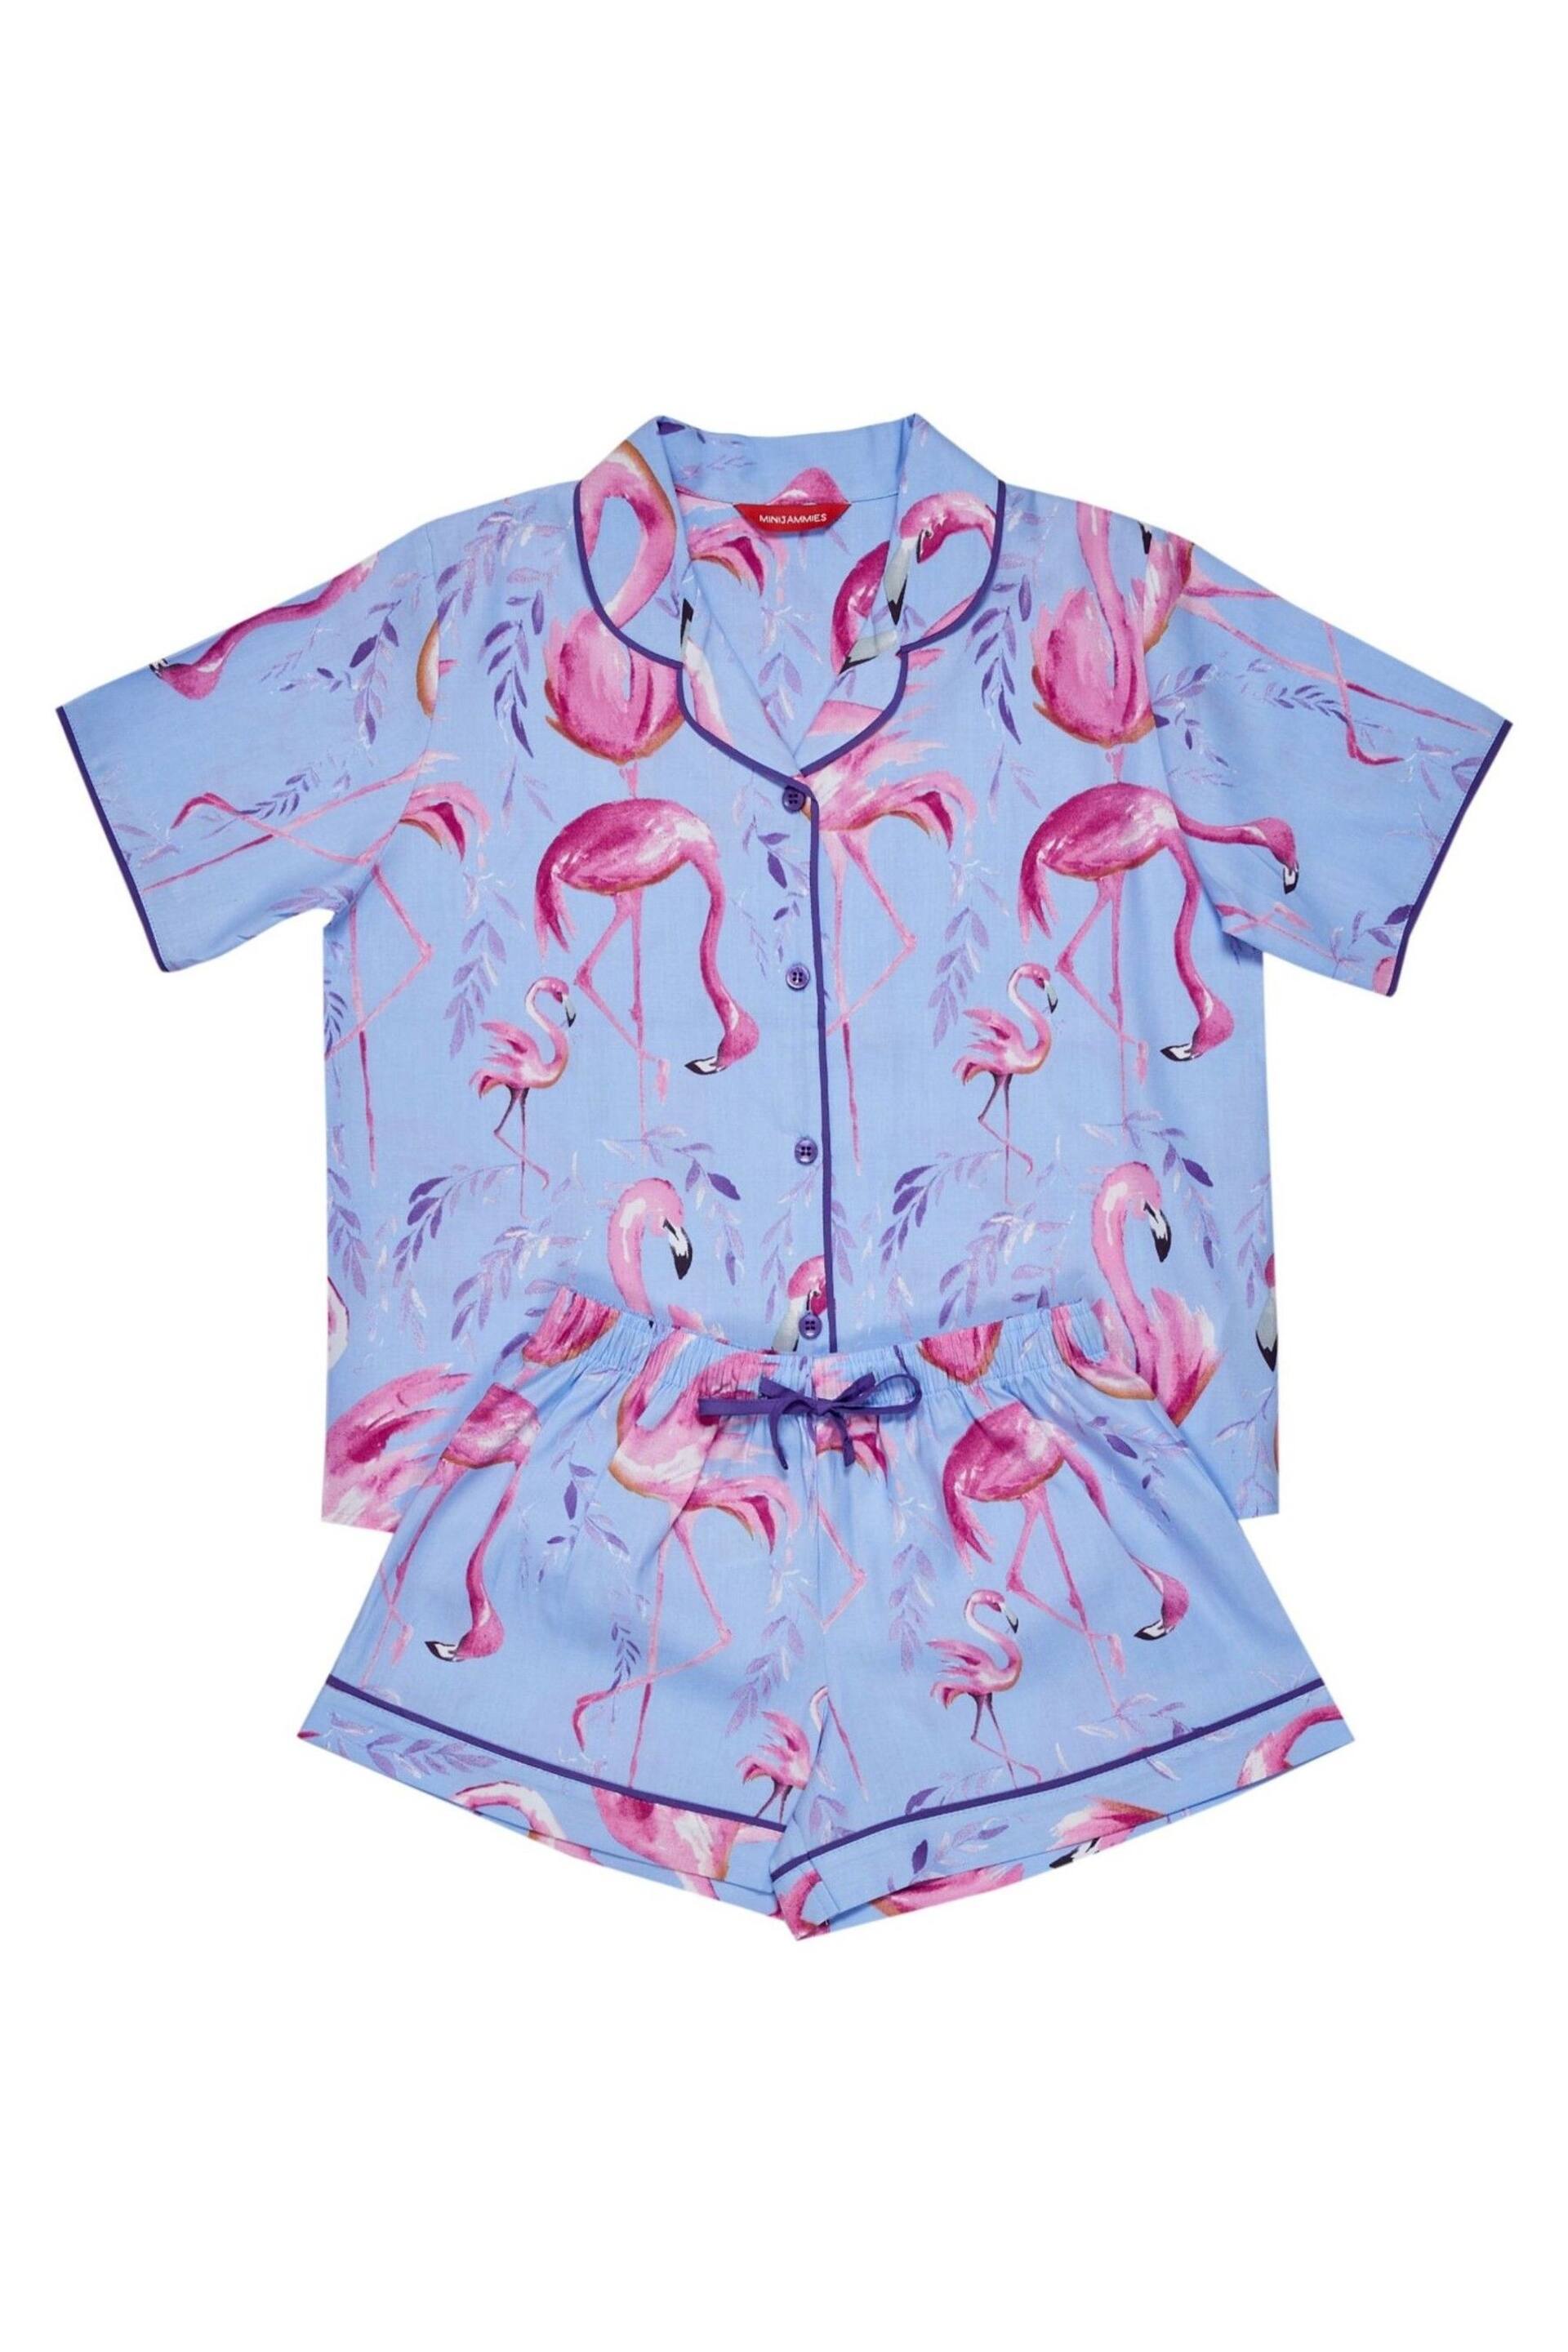 Minijammies Flamingo Print Short Sleeve Shorty Set - Image 4 of 4